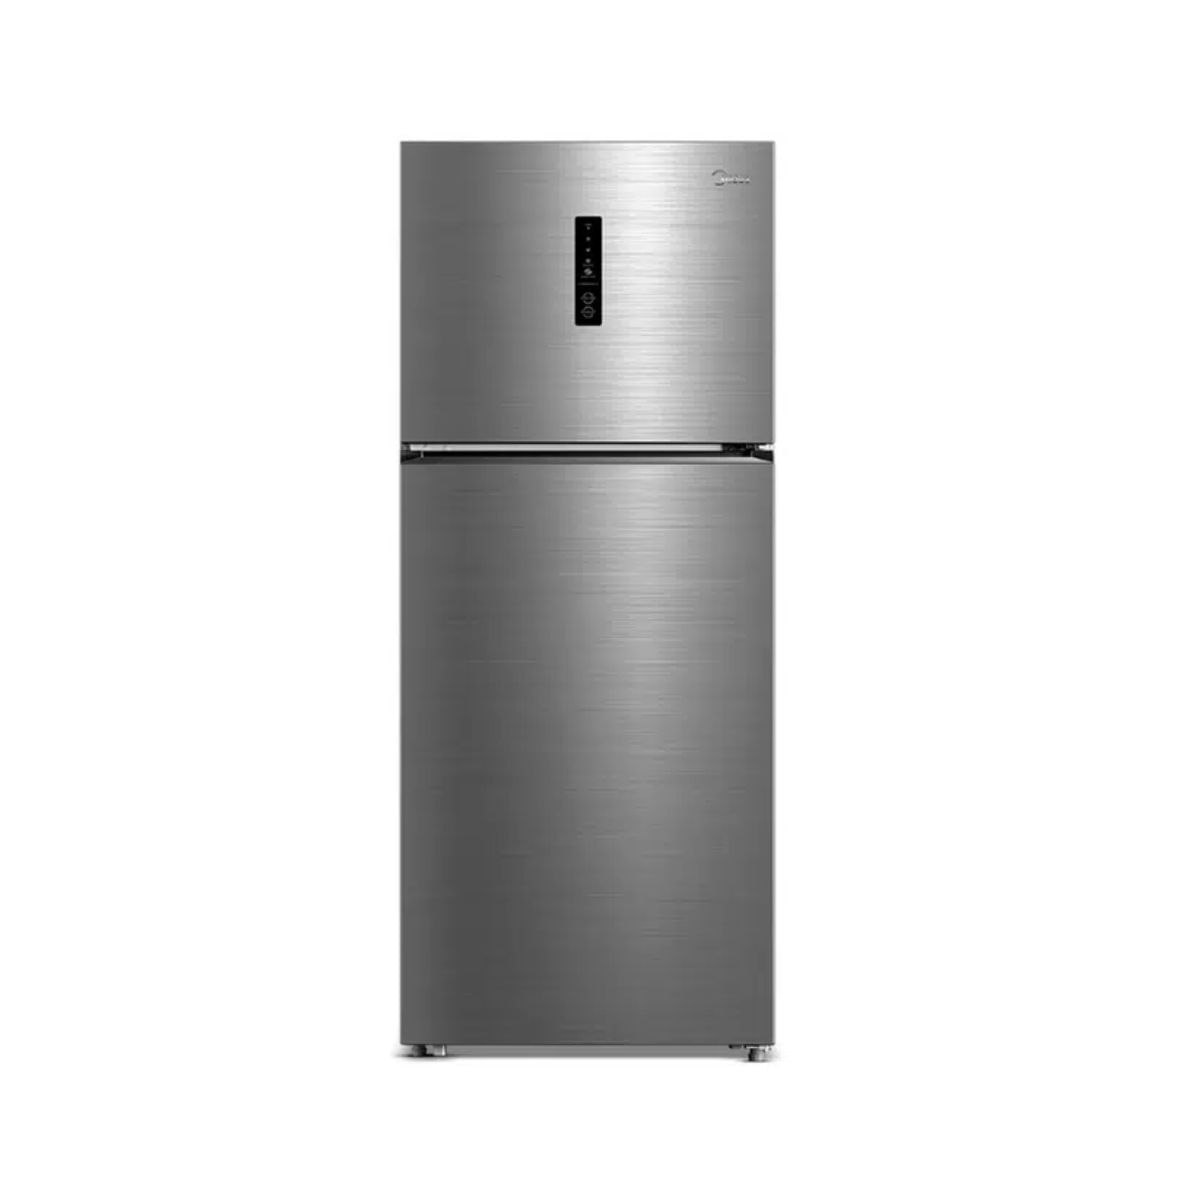 Geladeira/Refrigerador Midea Frost Free Duplex - Prata 411L MD-RT580MTA461